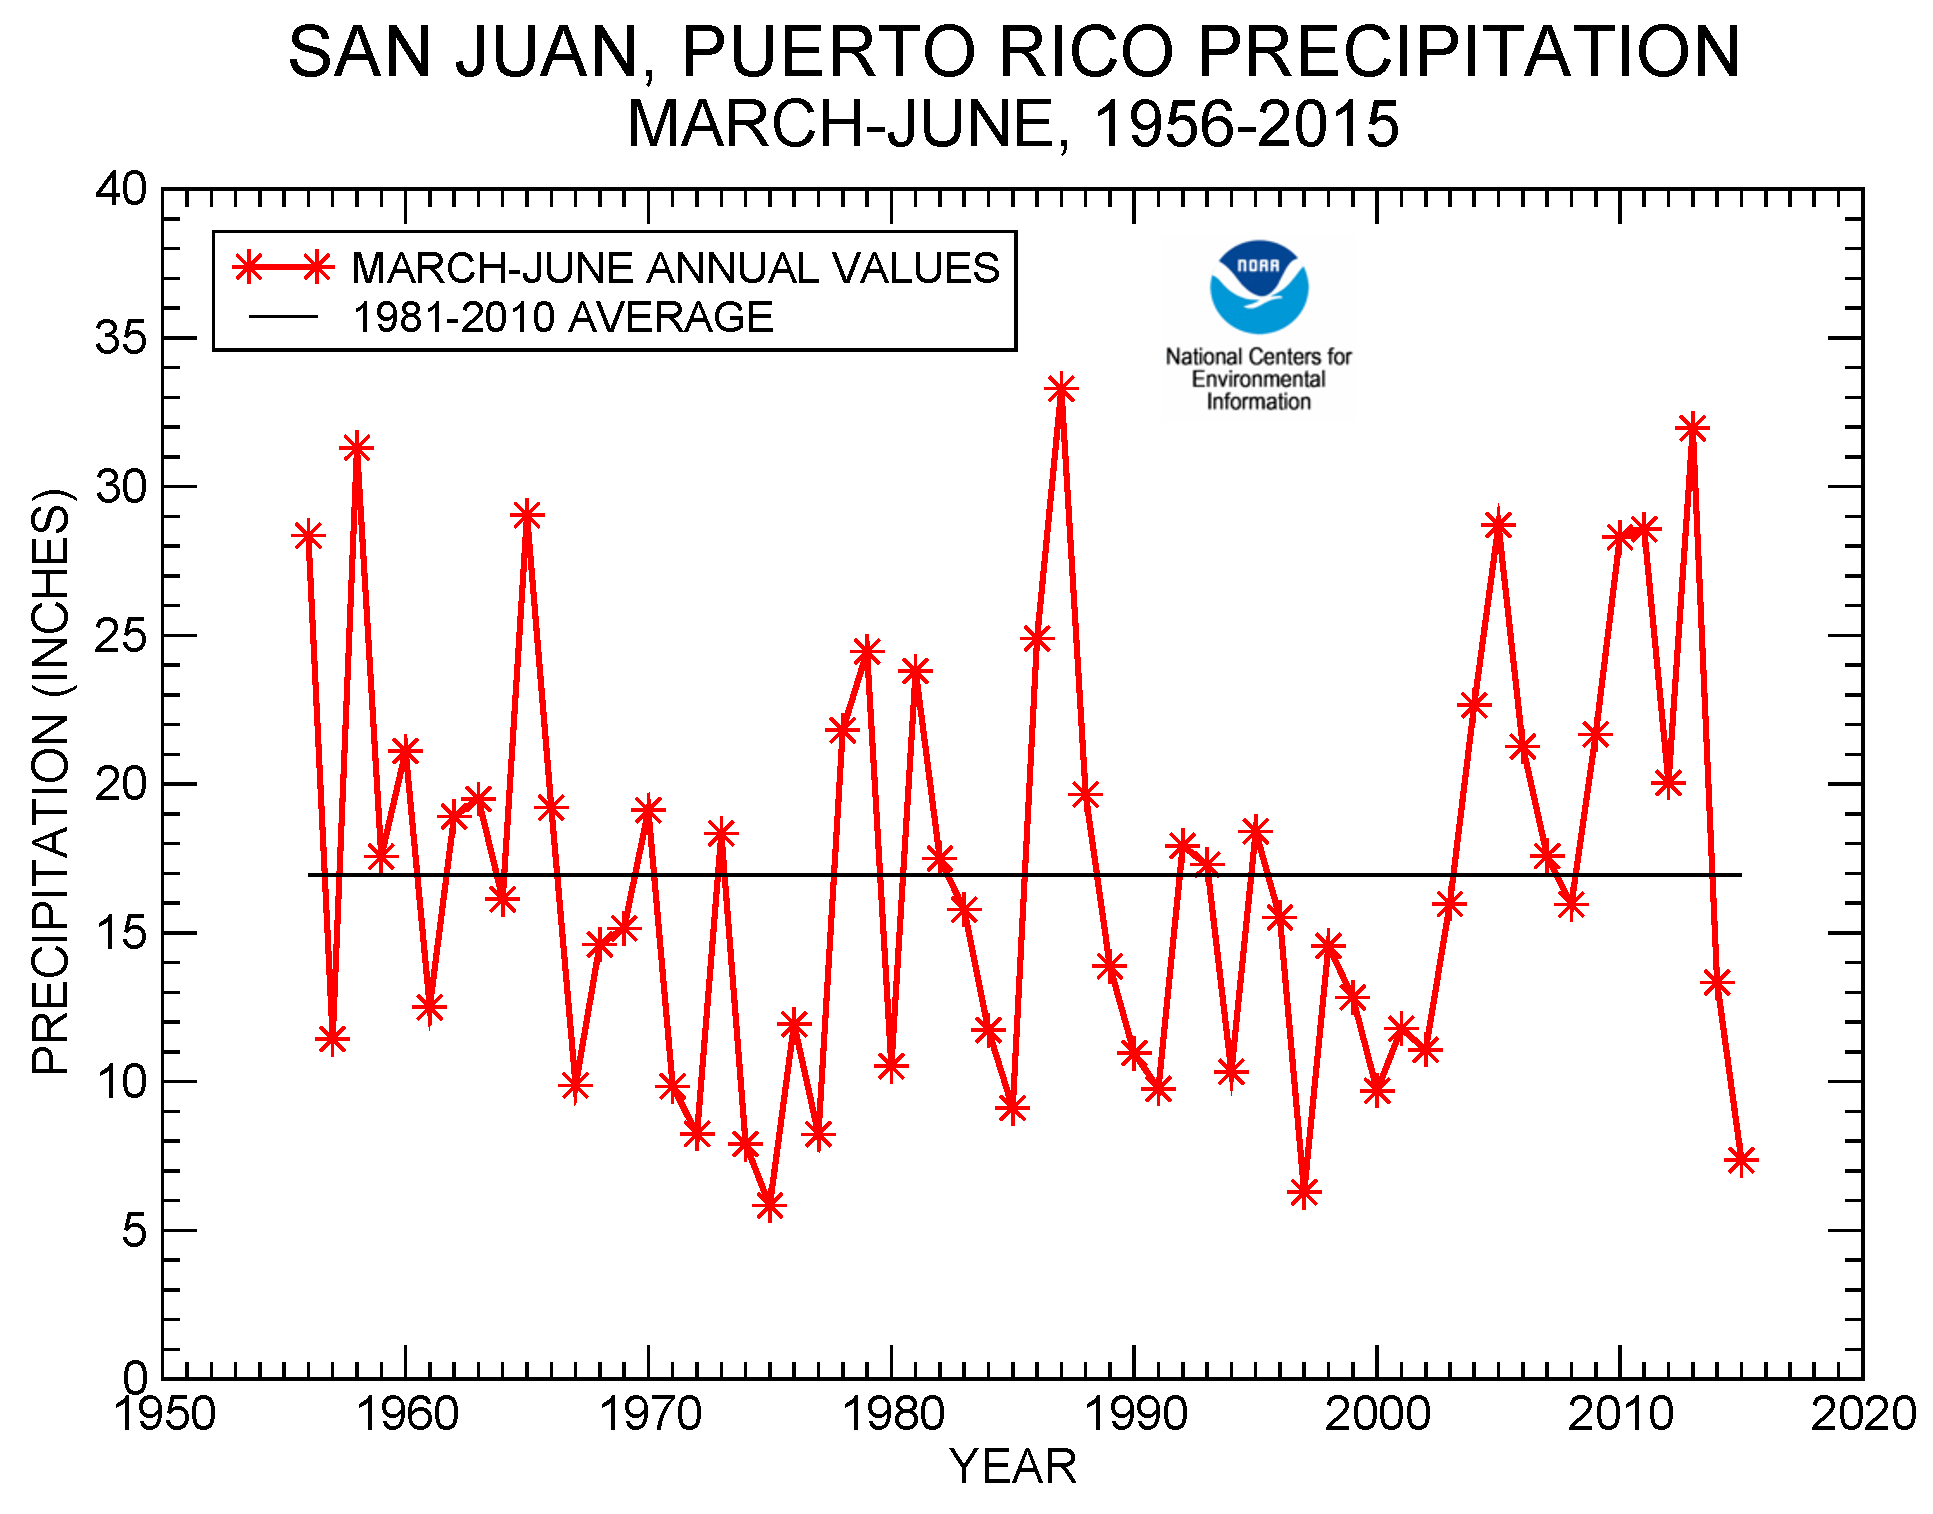 San Juan, Puerto Rico precipitation, March-June, 1956-2015